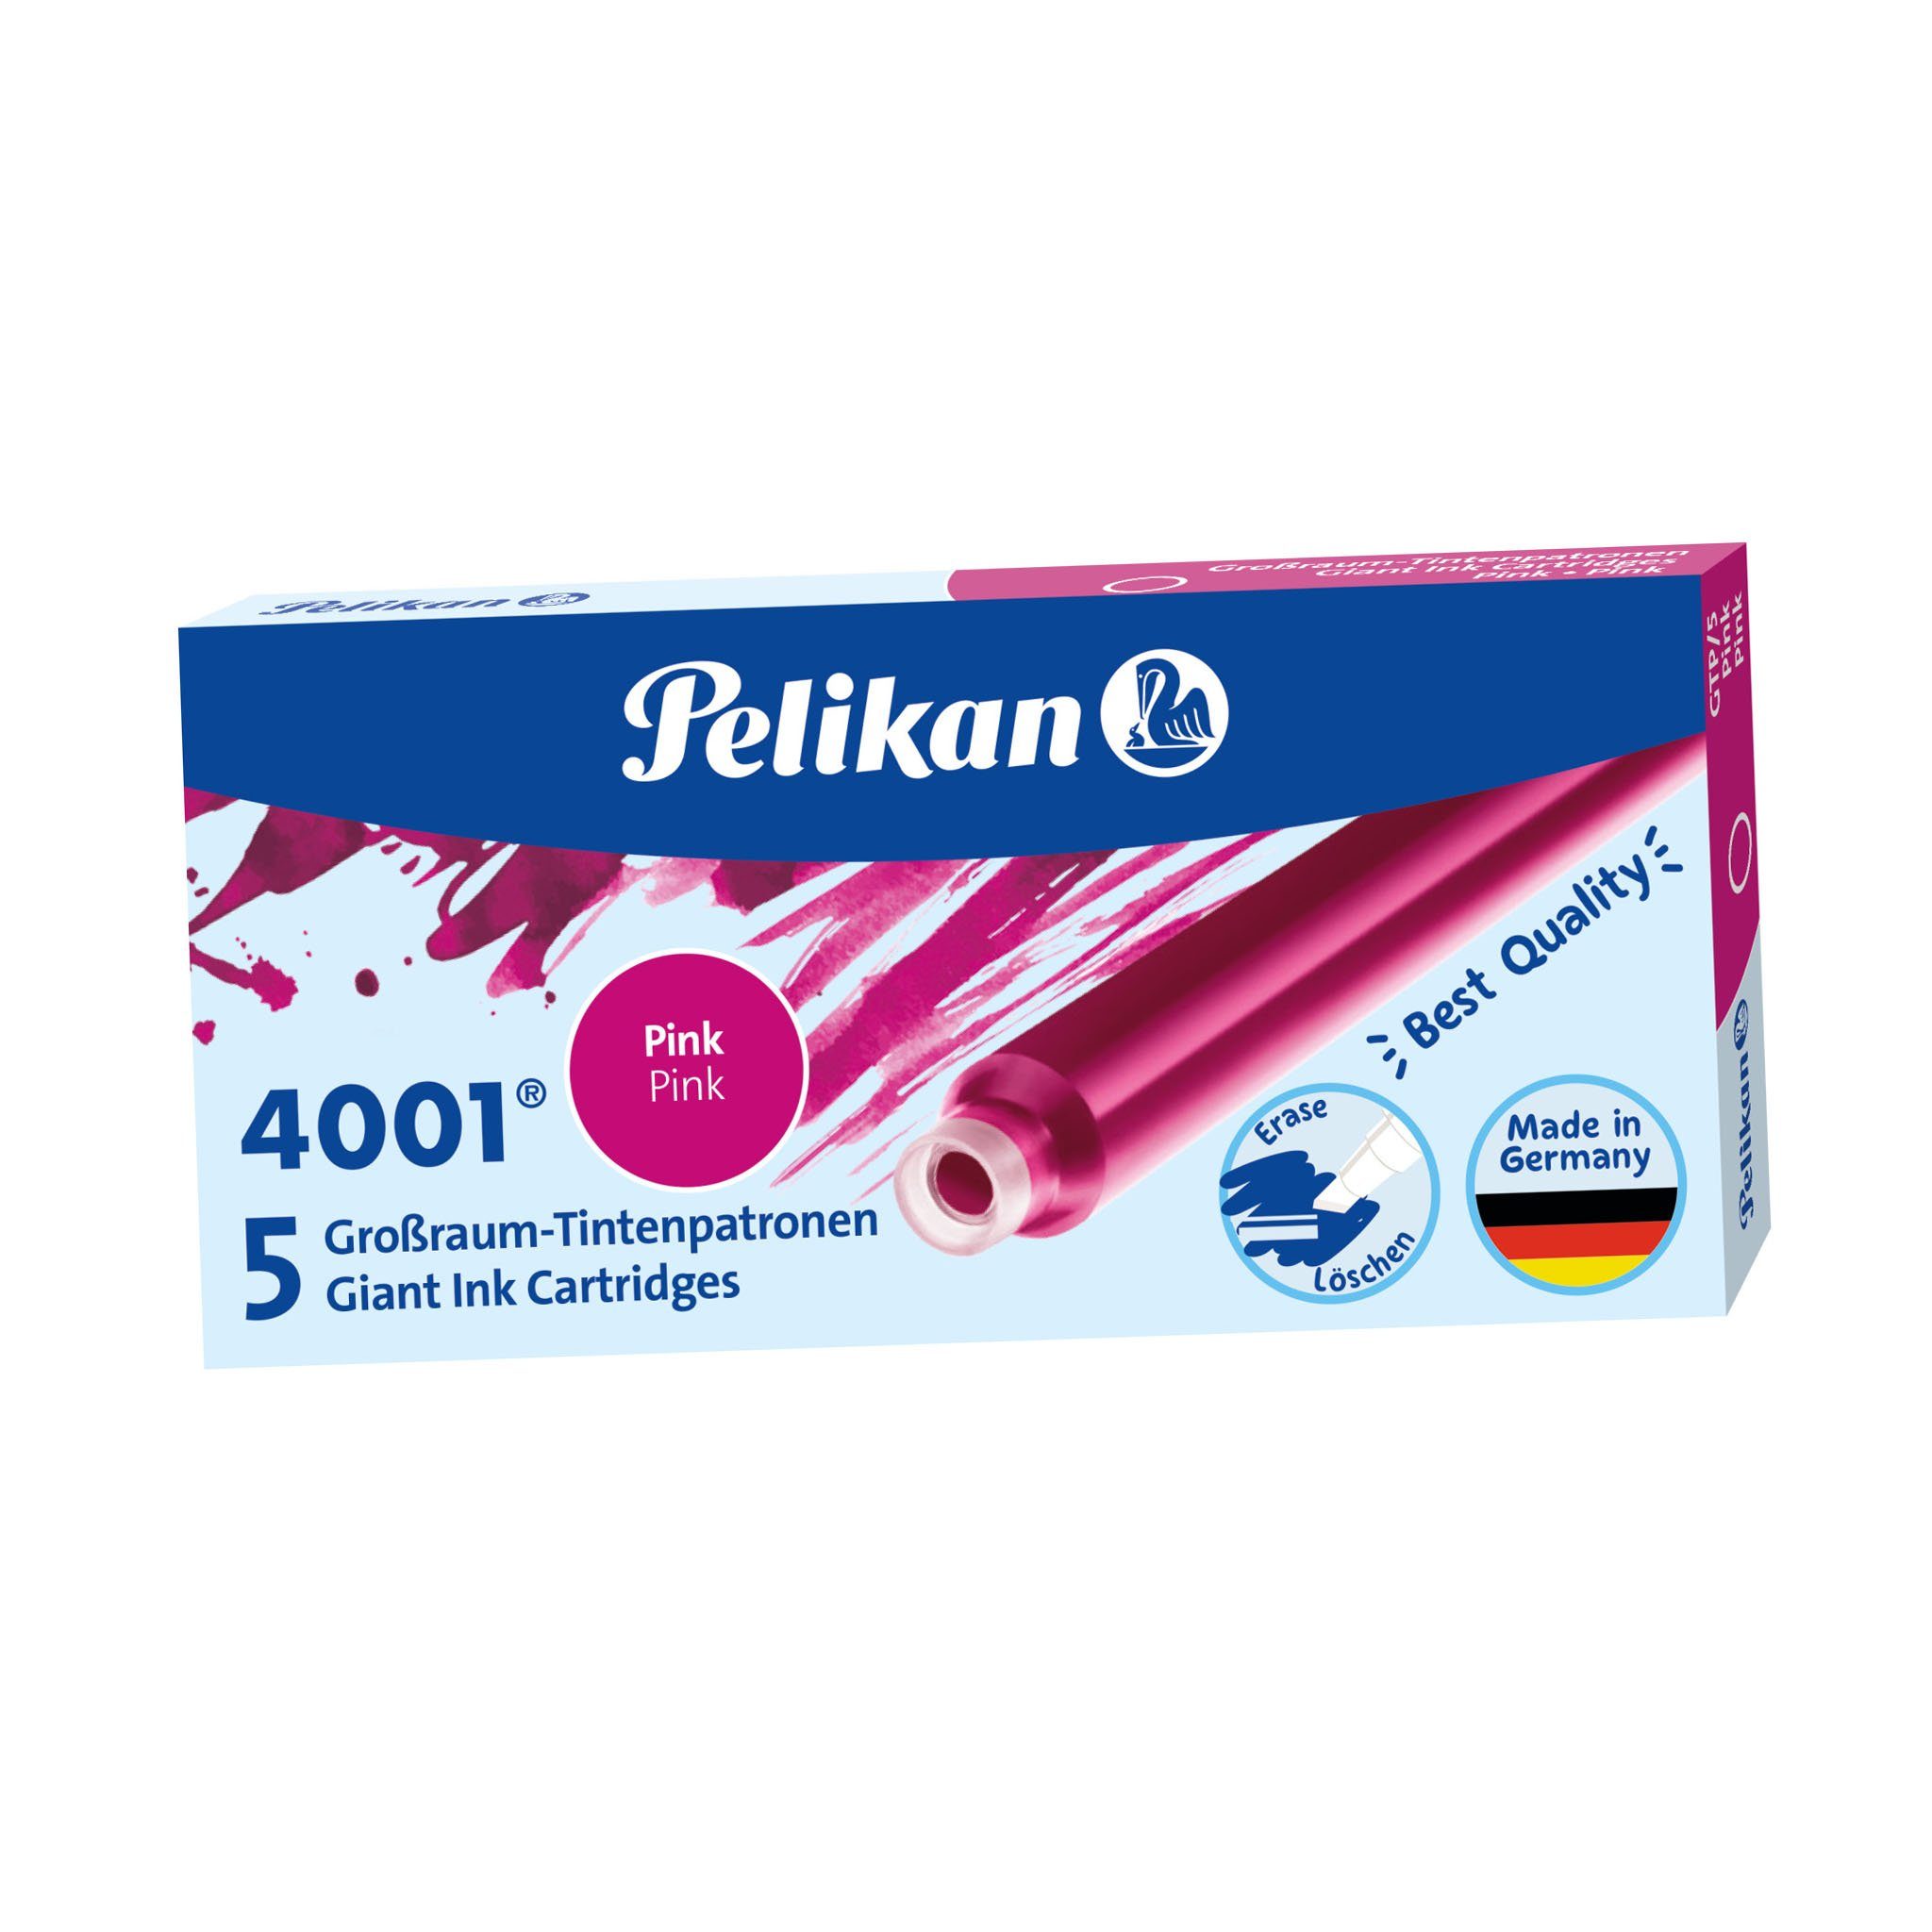 pink GTP/5, Füllfederhalter 4001 Großraum-Tintenpatronen Pelikan Pelikan